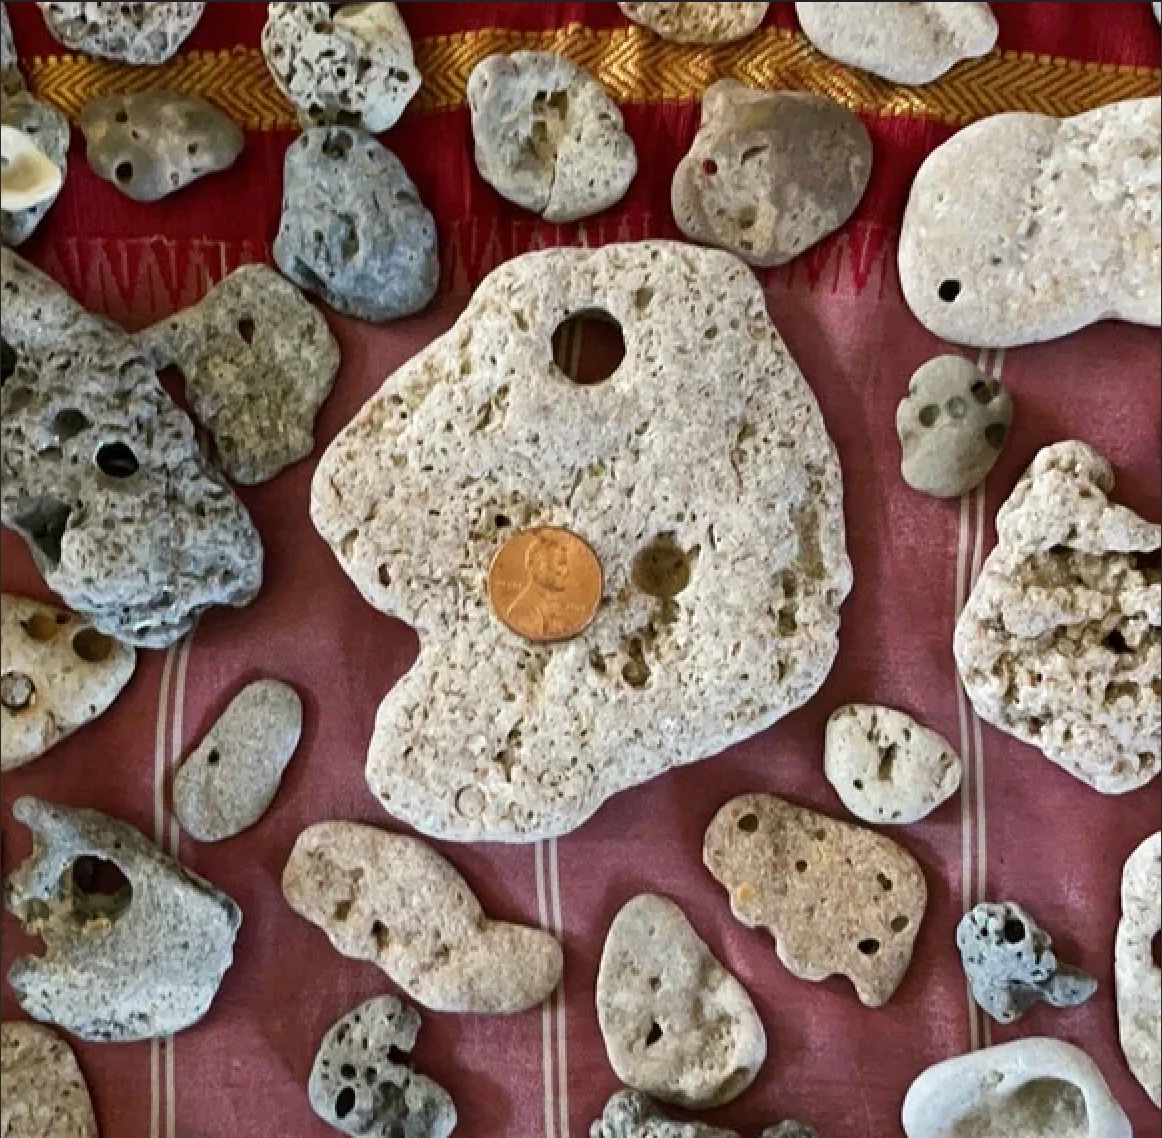 Large Lot of Hag Stones, 50 Hag Stones of All Sizes, Bodhi Crystal Magic